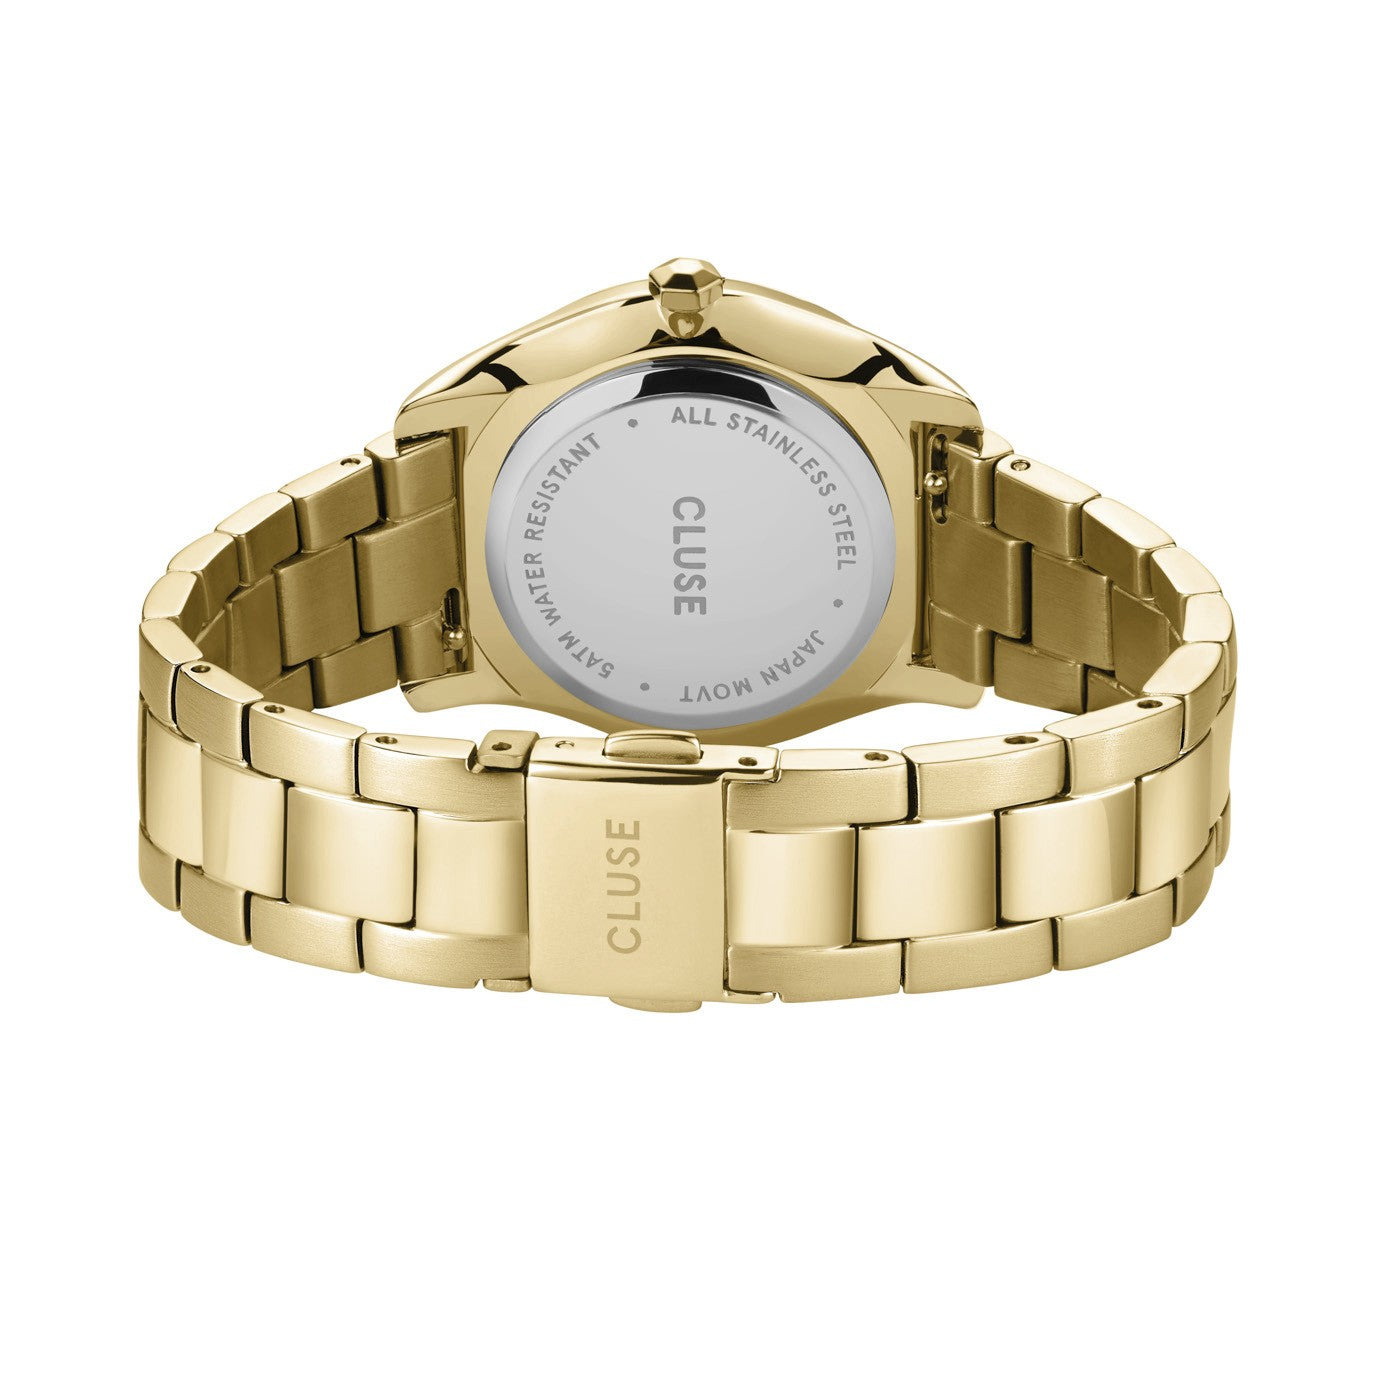 Cluse Feroce Petite Watch Gold